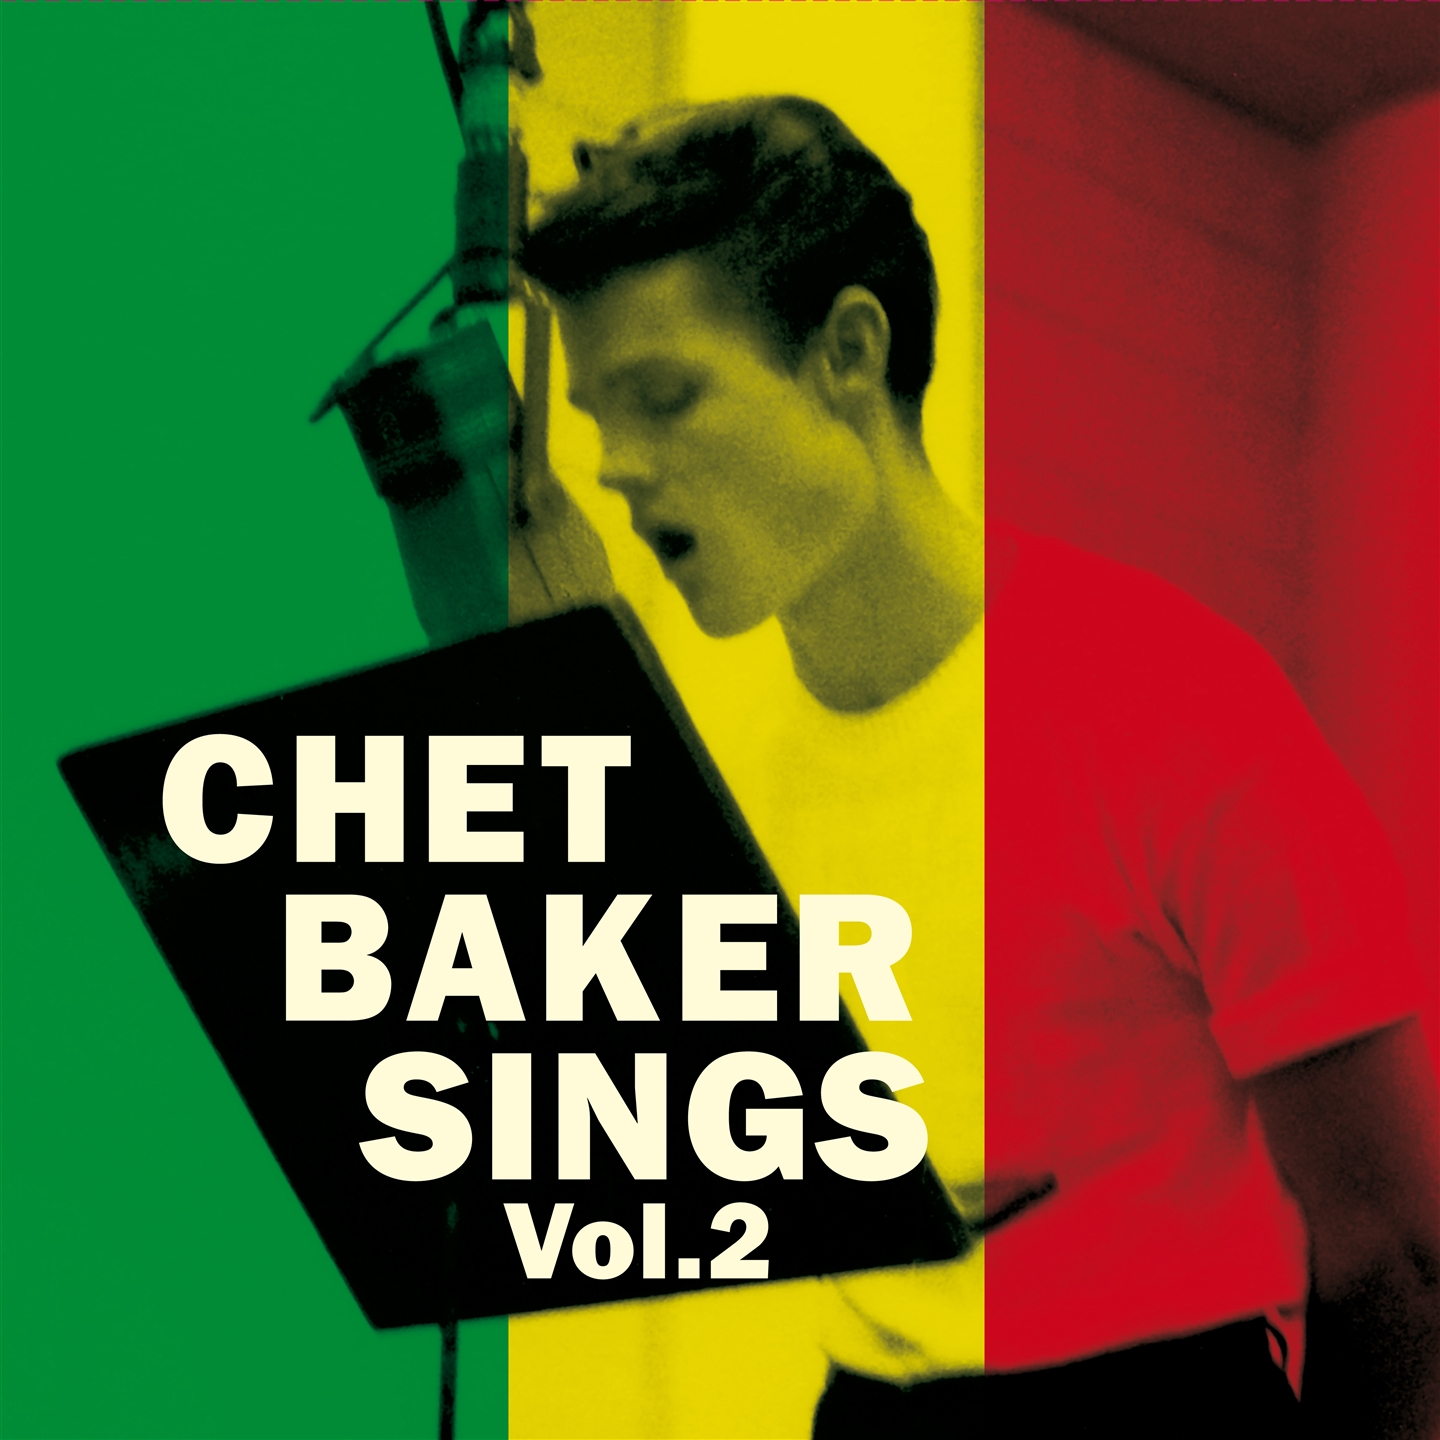 CHET BAKER SINGS VOL. 2 [LP]